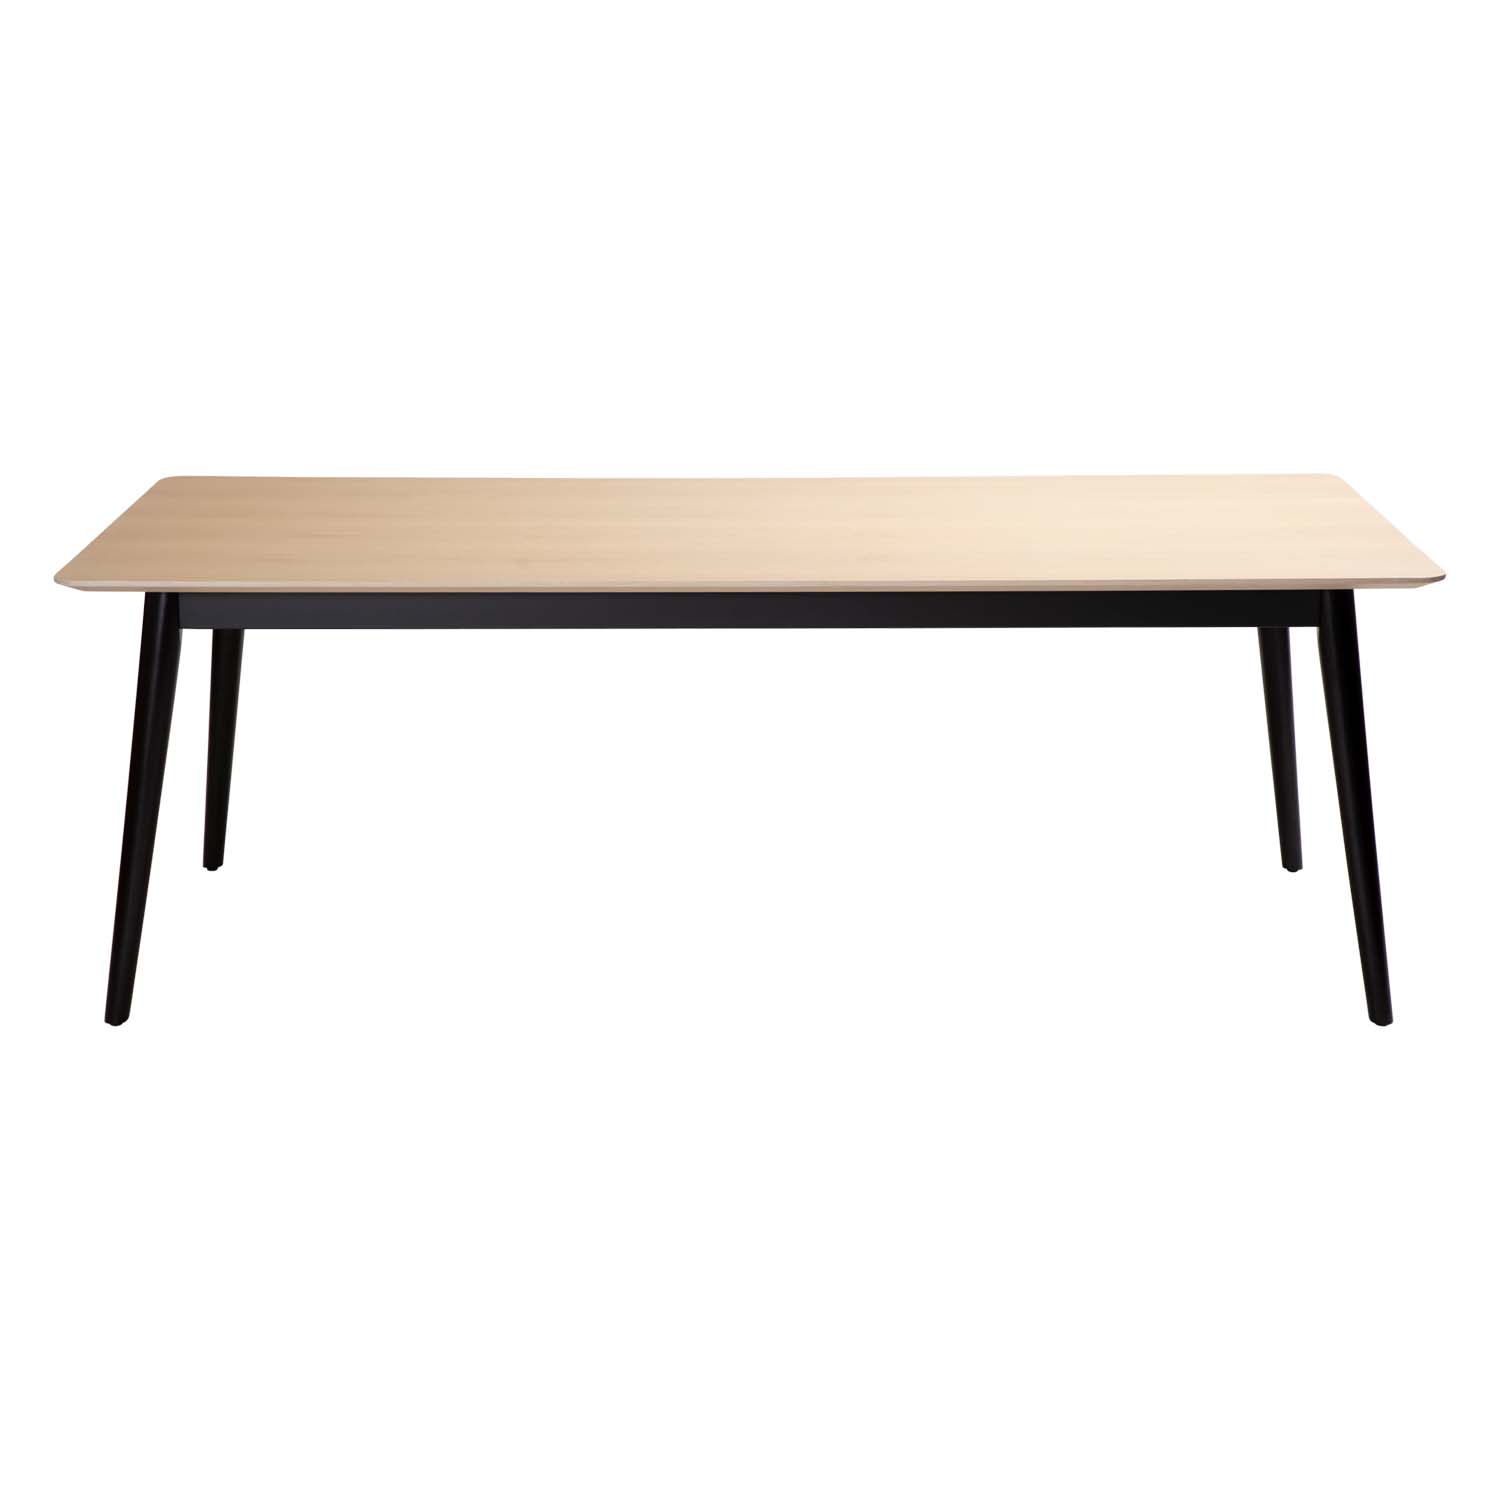 7: DAN-FORM Yolo spisebord, rektangulær - hvidvasket egefinér og sort træ (100x220)